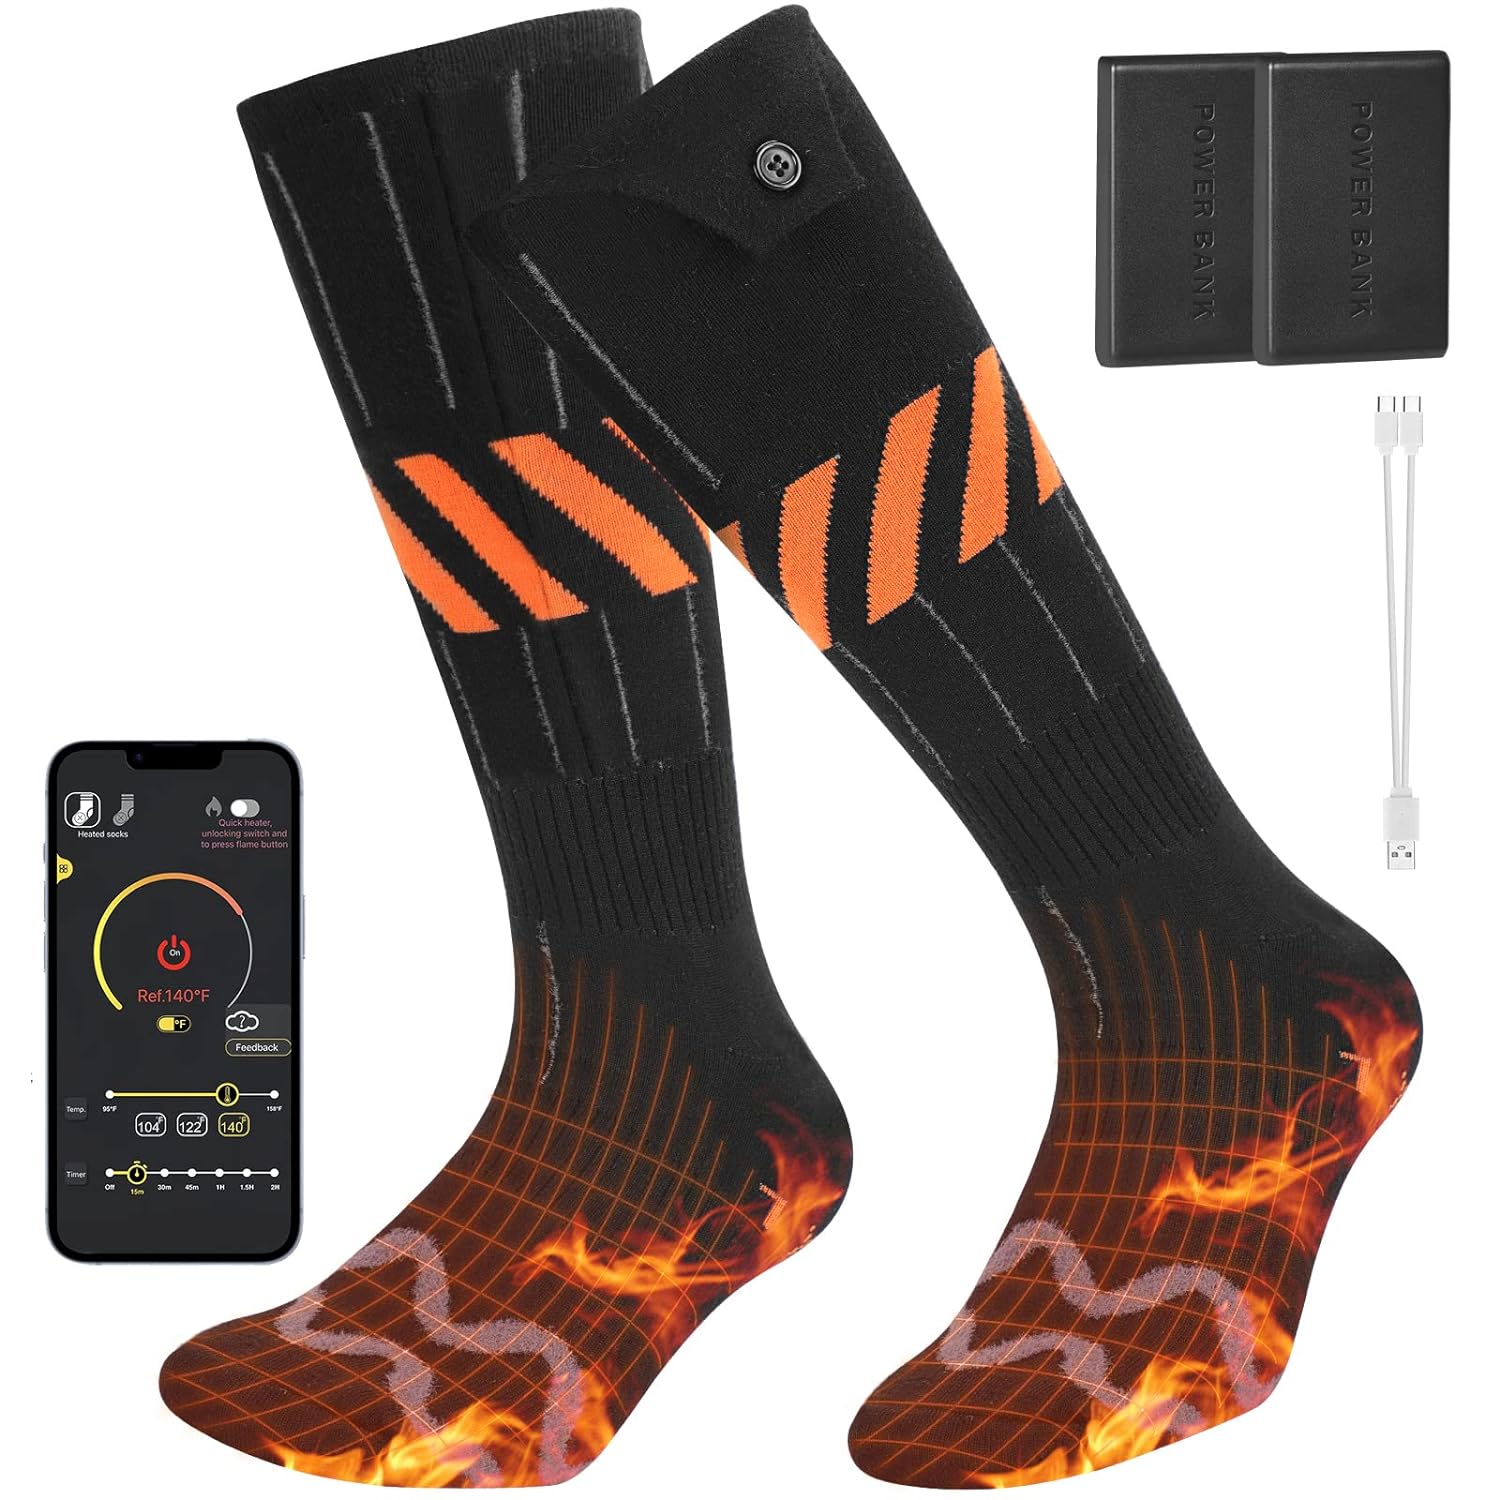 Heated Socks for Men Women, 5V/5000mAh Battery Powered Rechargeable Electric Heated Socks, Electric Heating Socks with APP Remote Control, for Hunting Winter Skiing Outdoors(Orange Black-L)